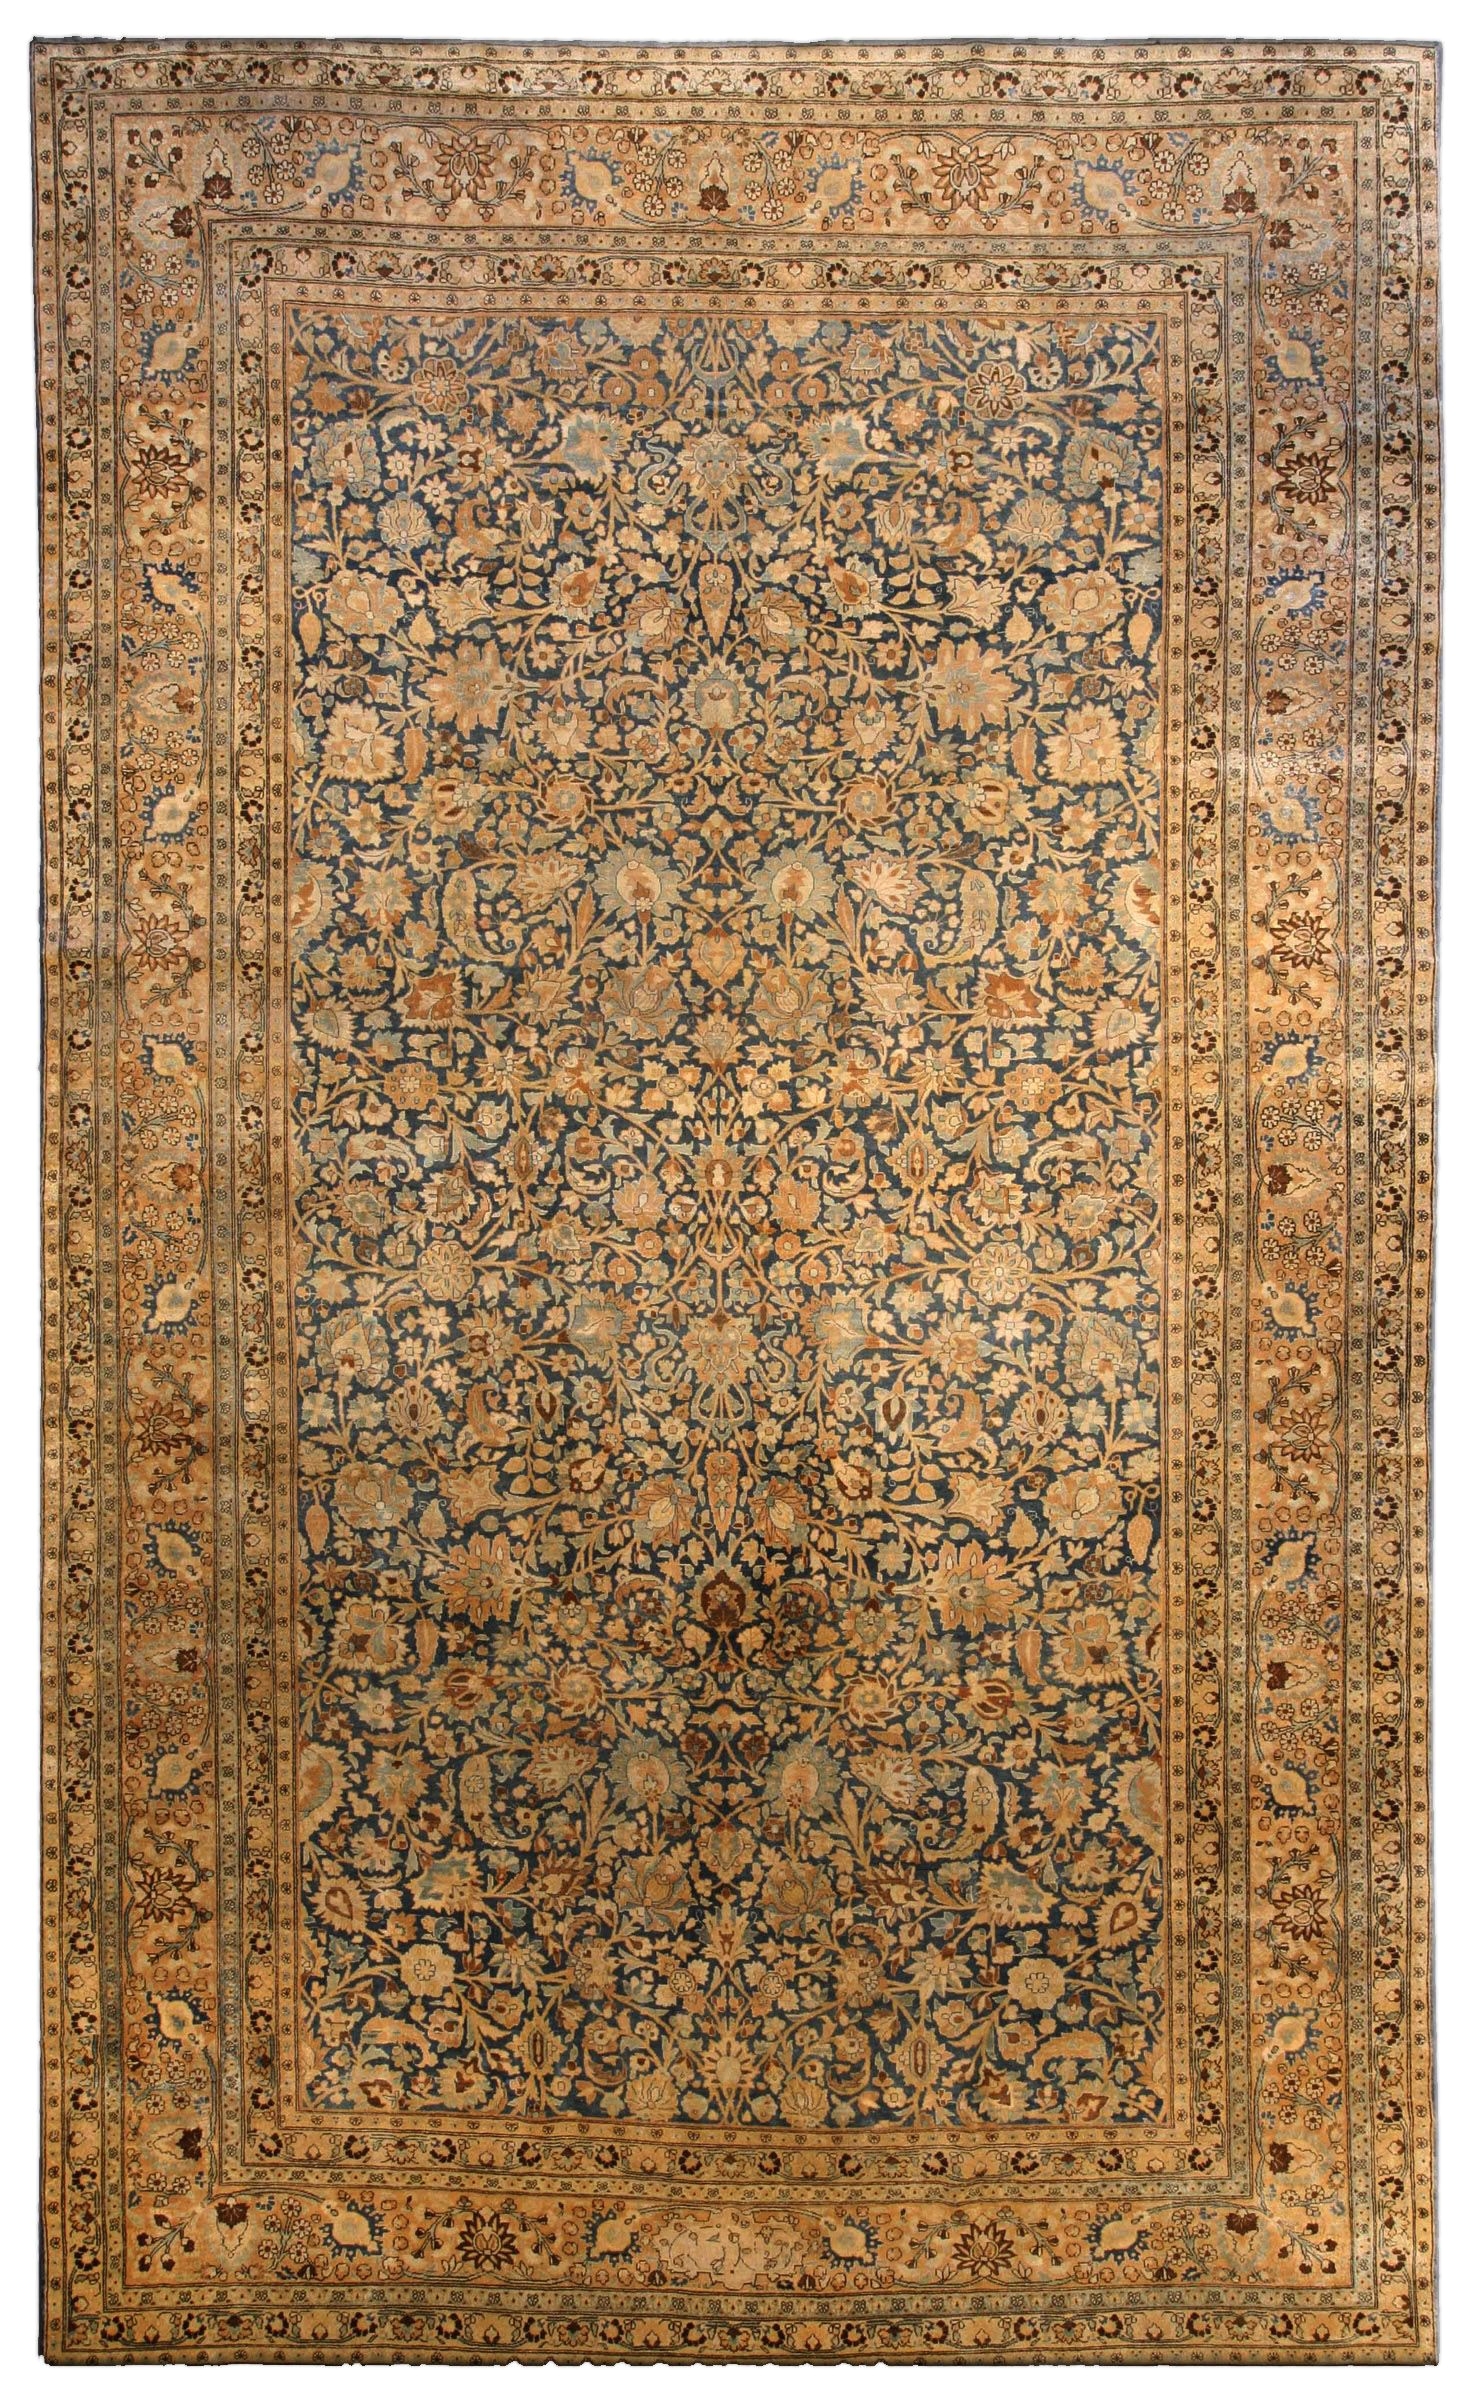 persian rugs persian rug antique rug in gold color oriental rug oriental pattern for modern elegant interior decor rug in living room rug